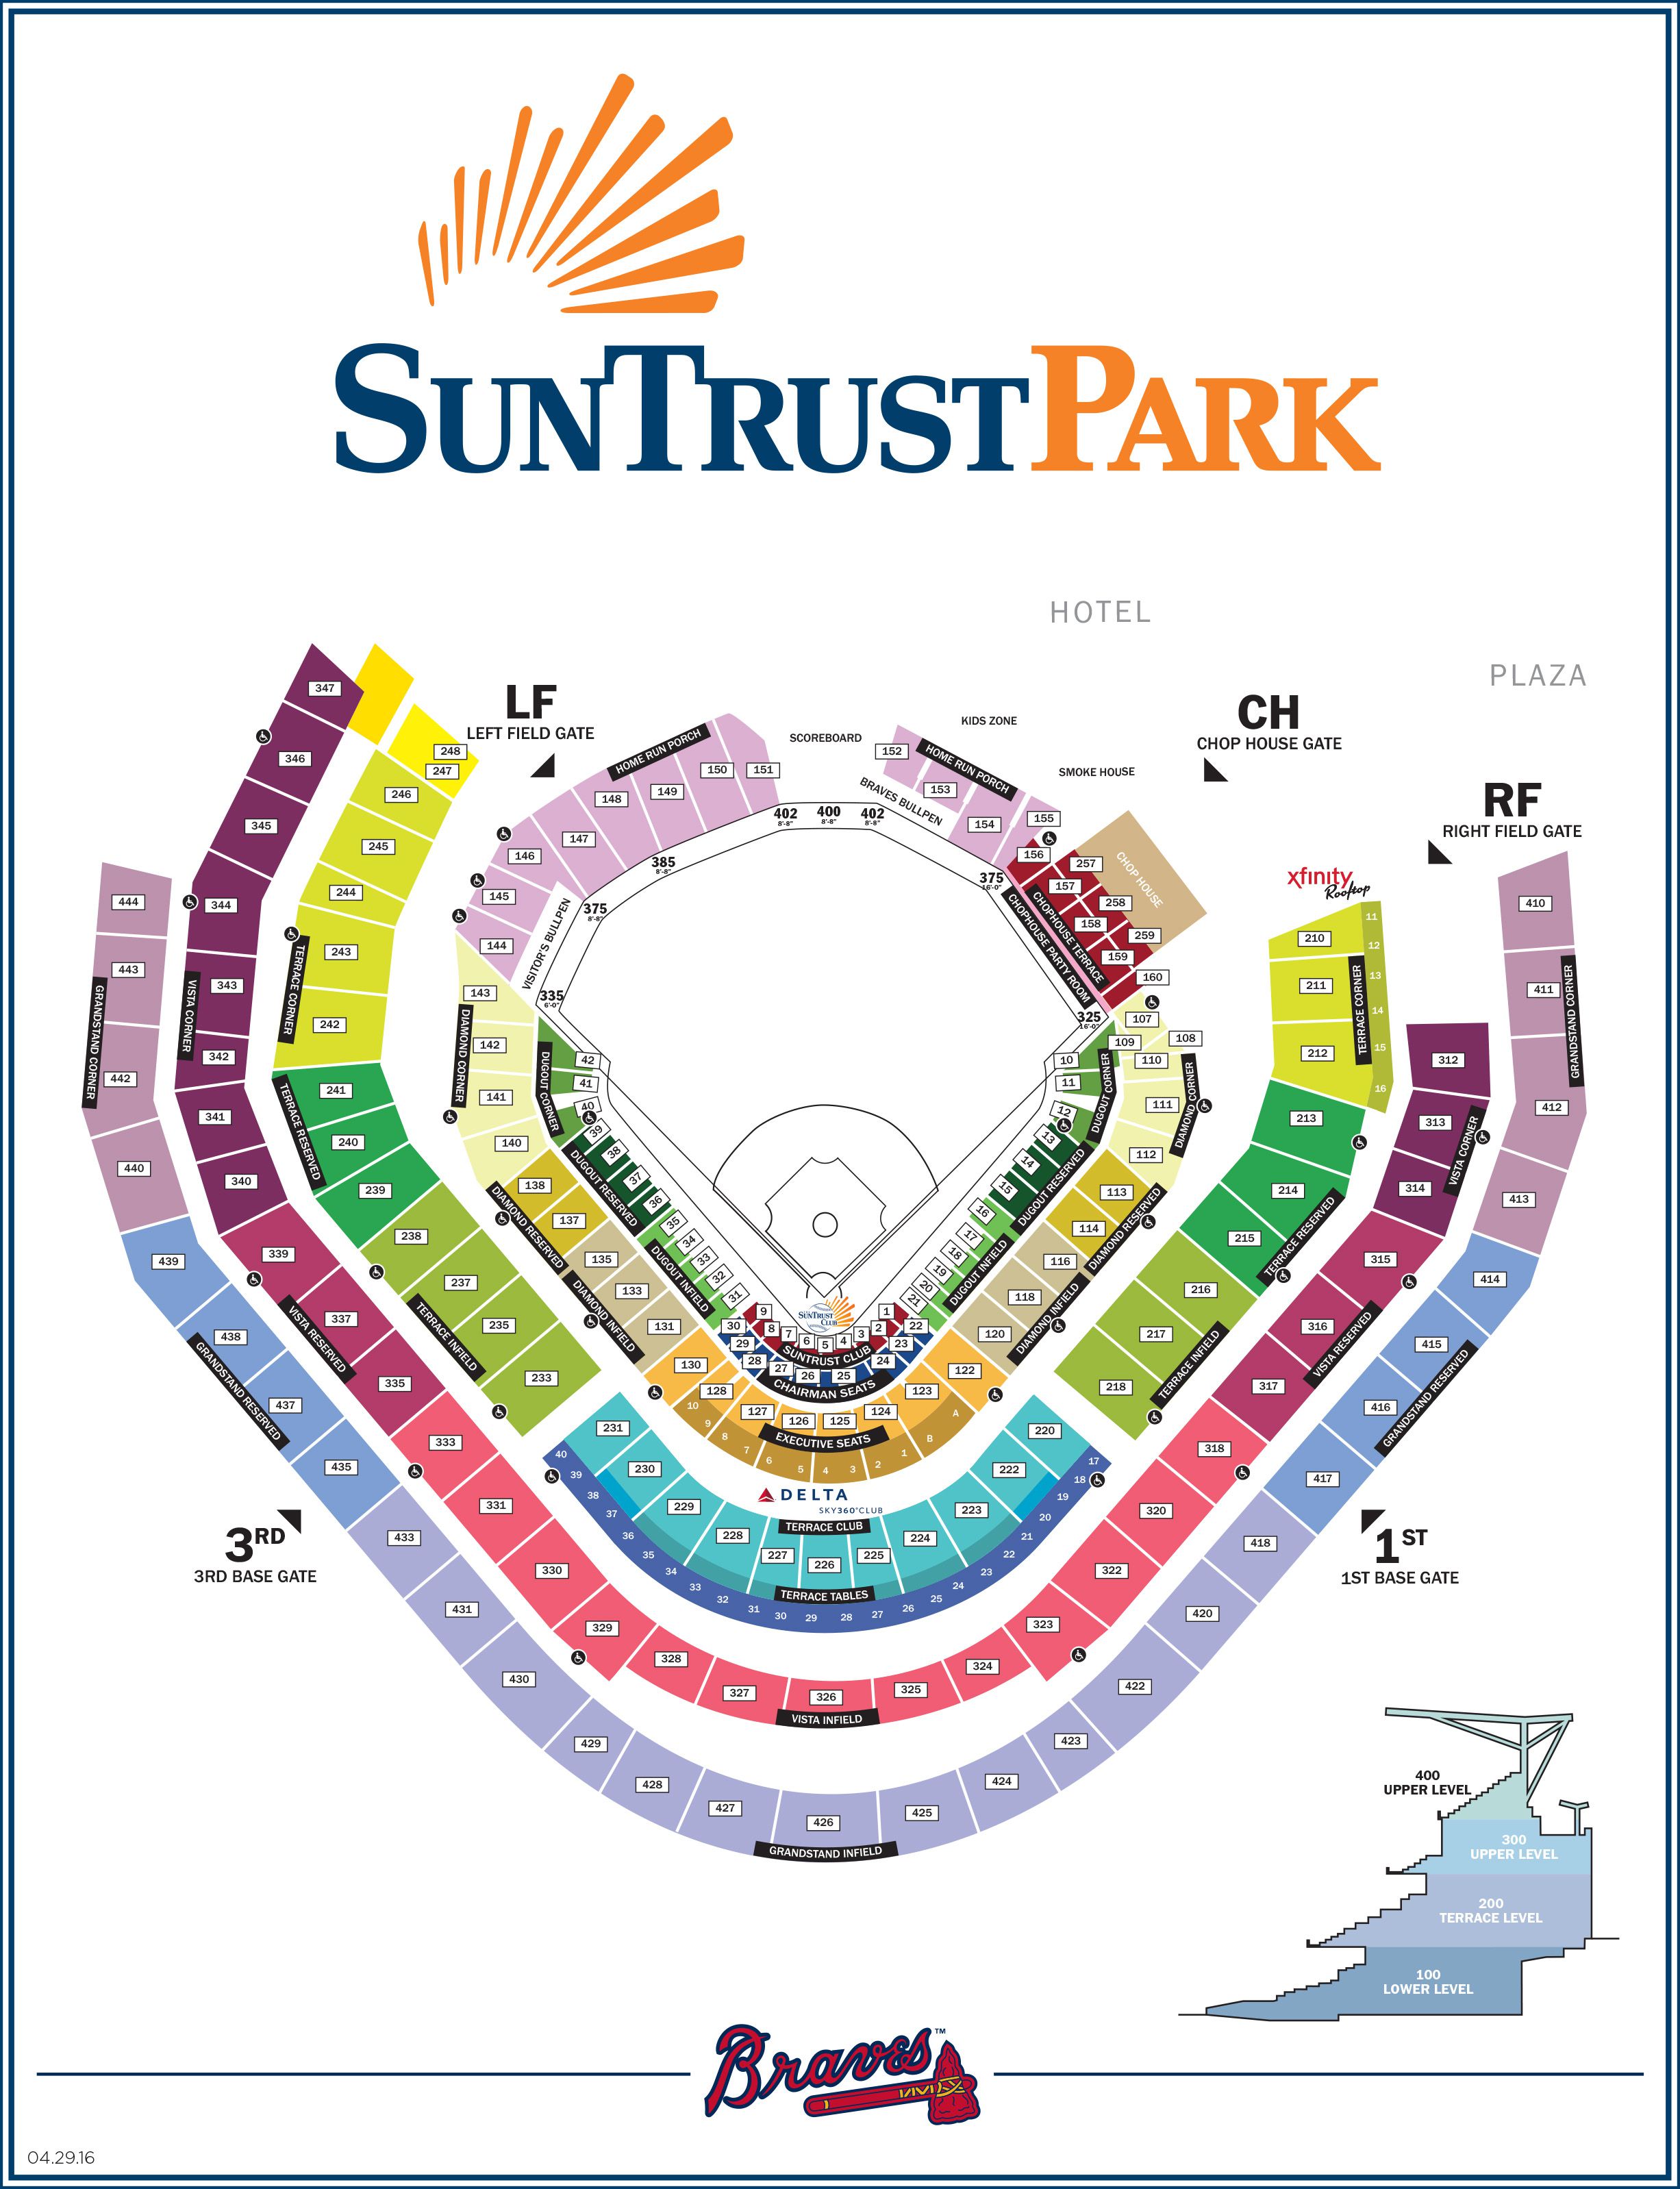 SunTrust Park seating chart, gates and entrances map